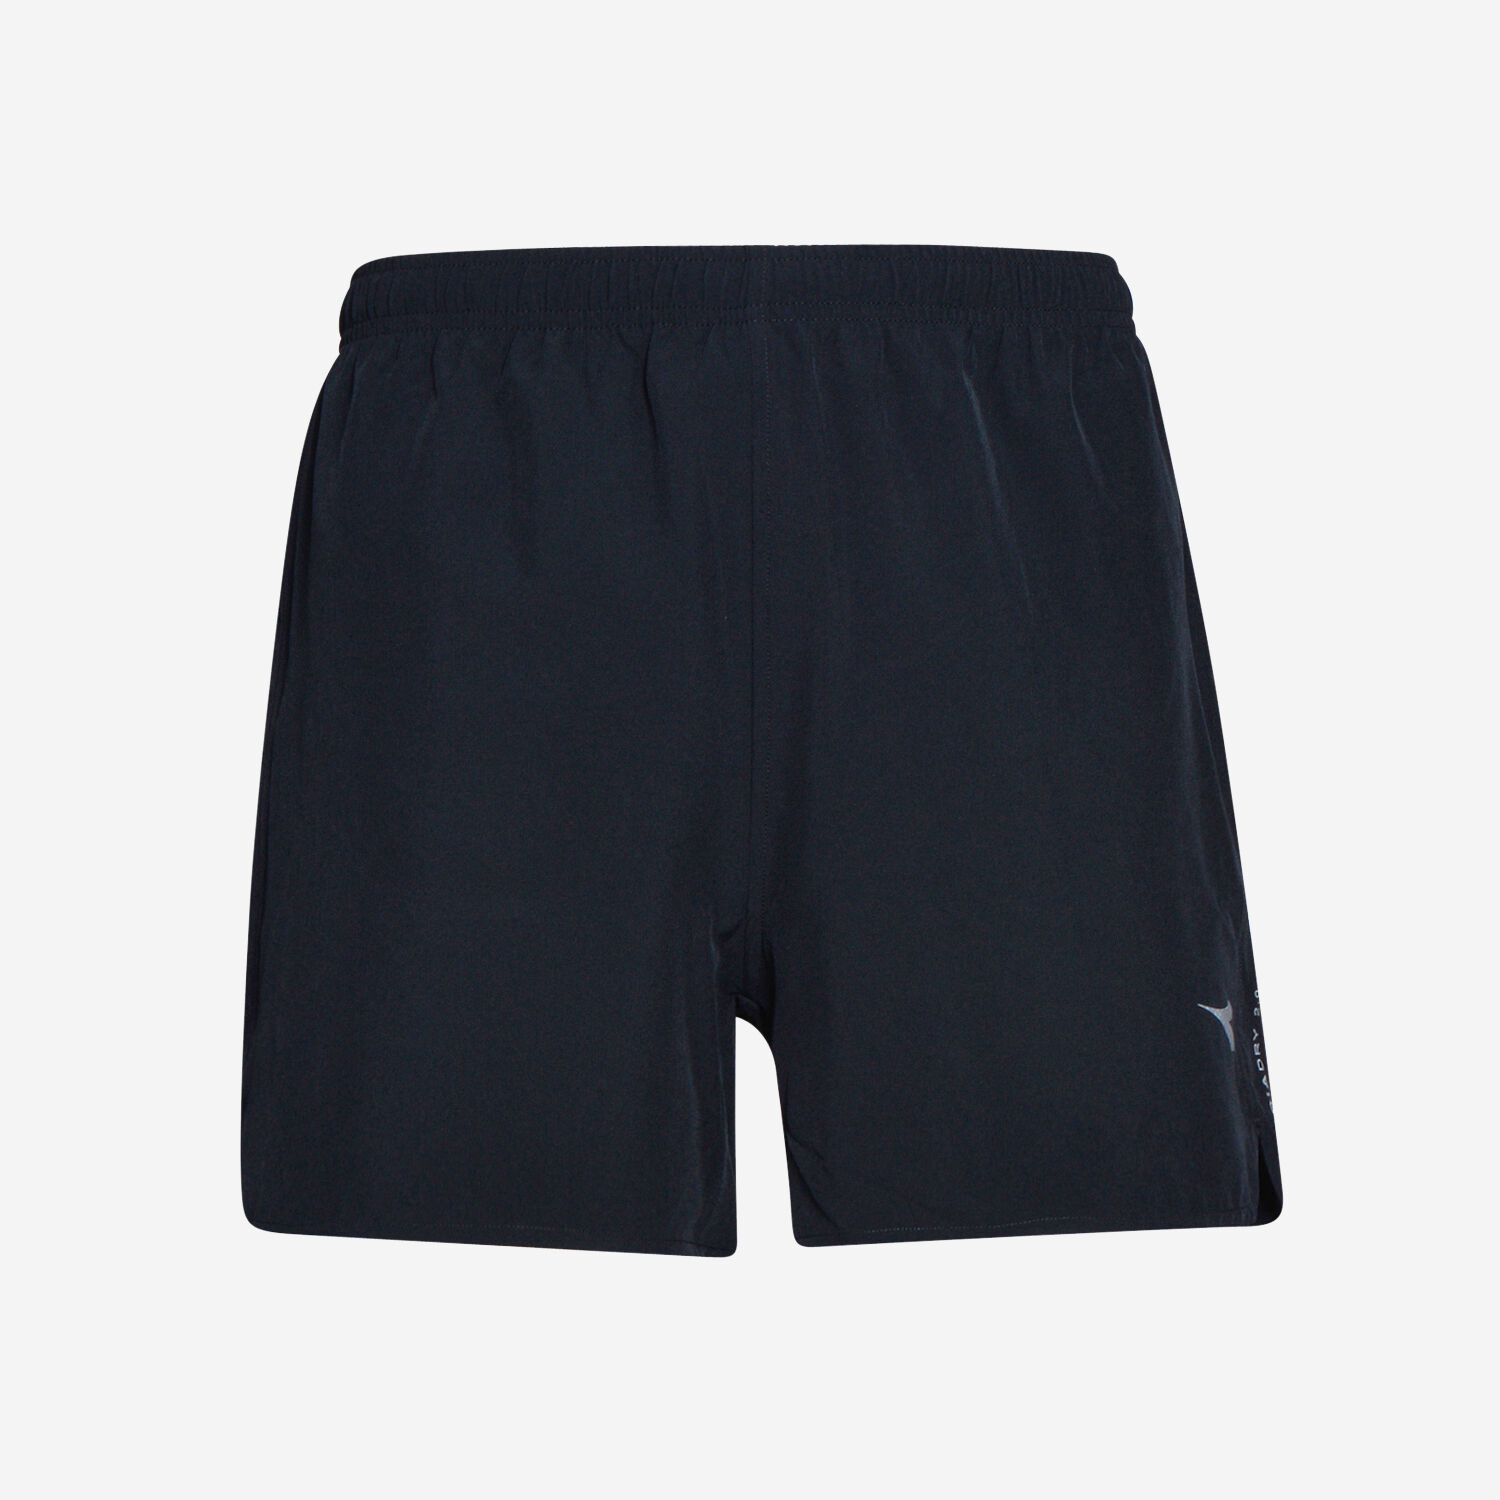 Diadora Microfiber 12.5 shorts RUNKD online running store